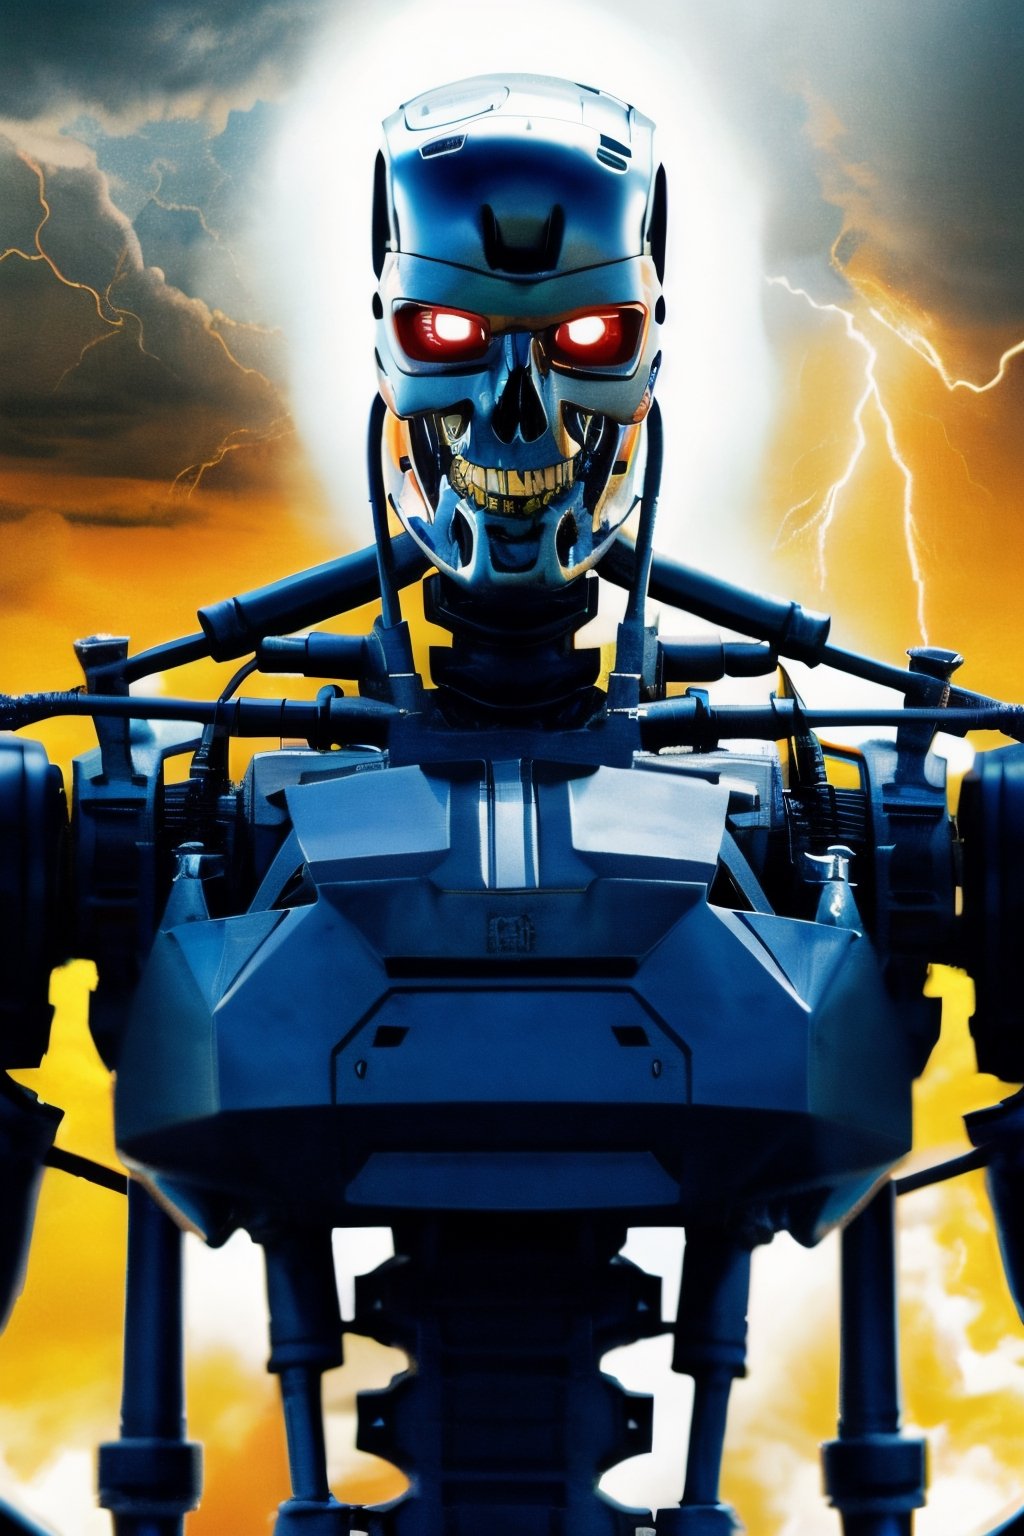 T800Endoskeleton,  facial portrait, standing menacing, machine gun, cloudy sky, lightning, futuristic wasteland, 